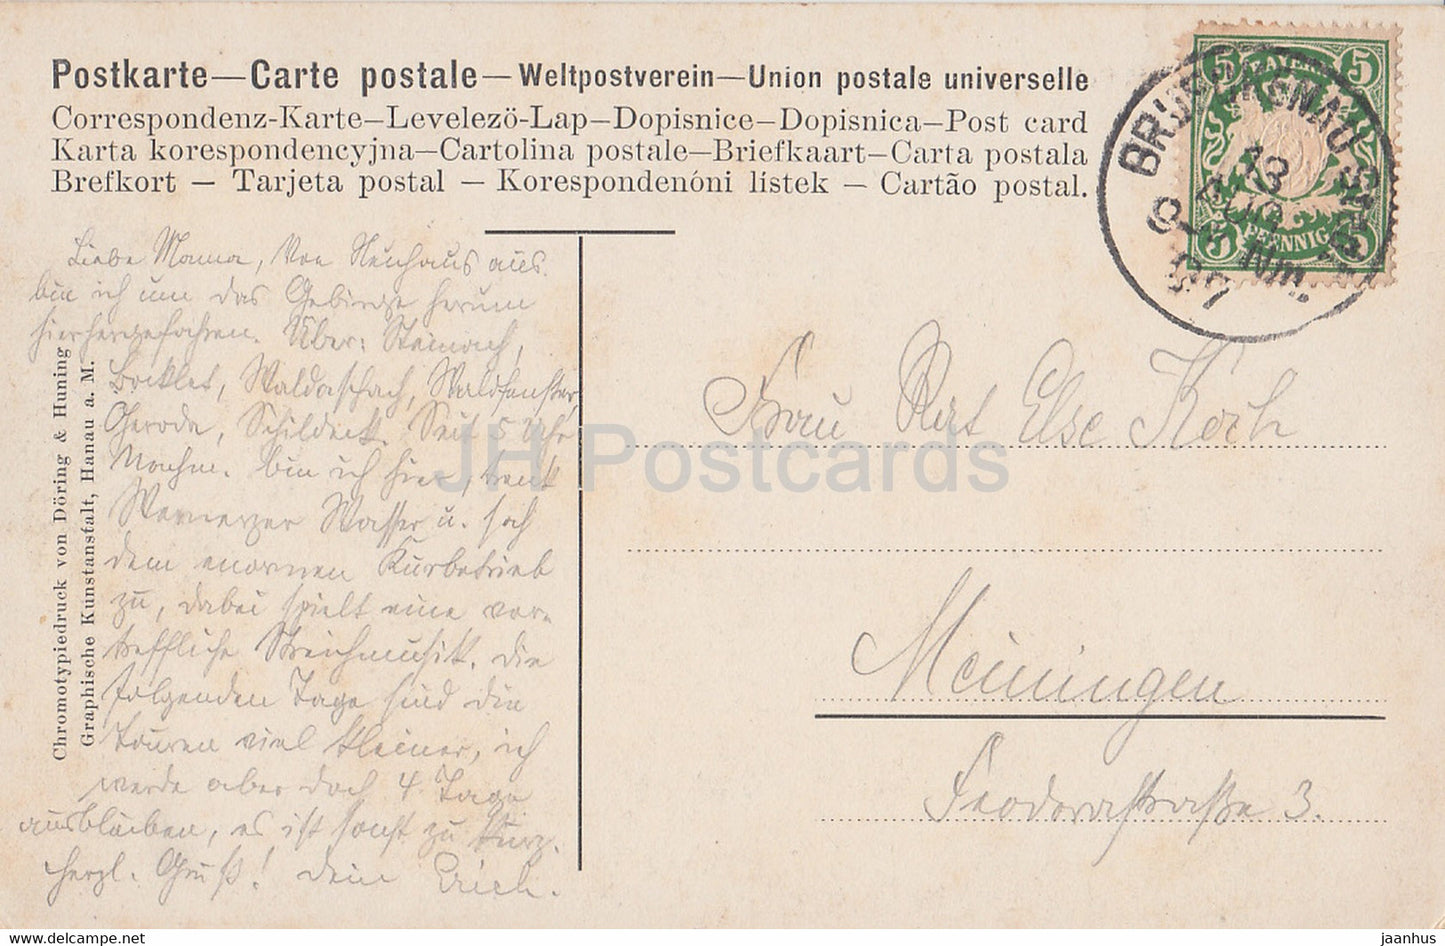 Luftkurort Bad Bruckenau 298 mètres - carte postale ancienne - 1907 - Allemagne - utilisé